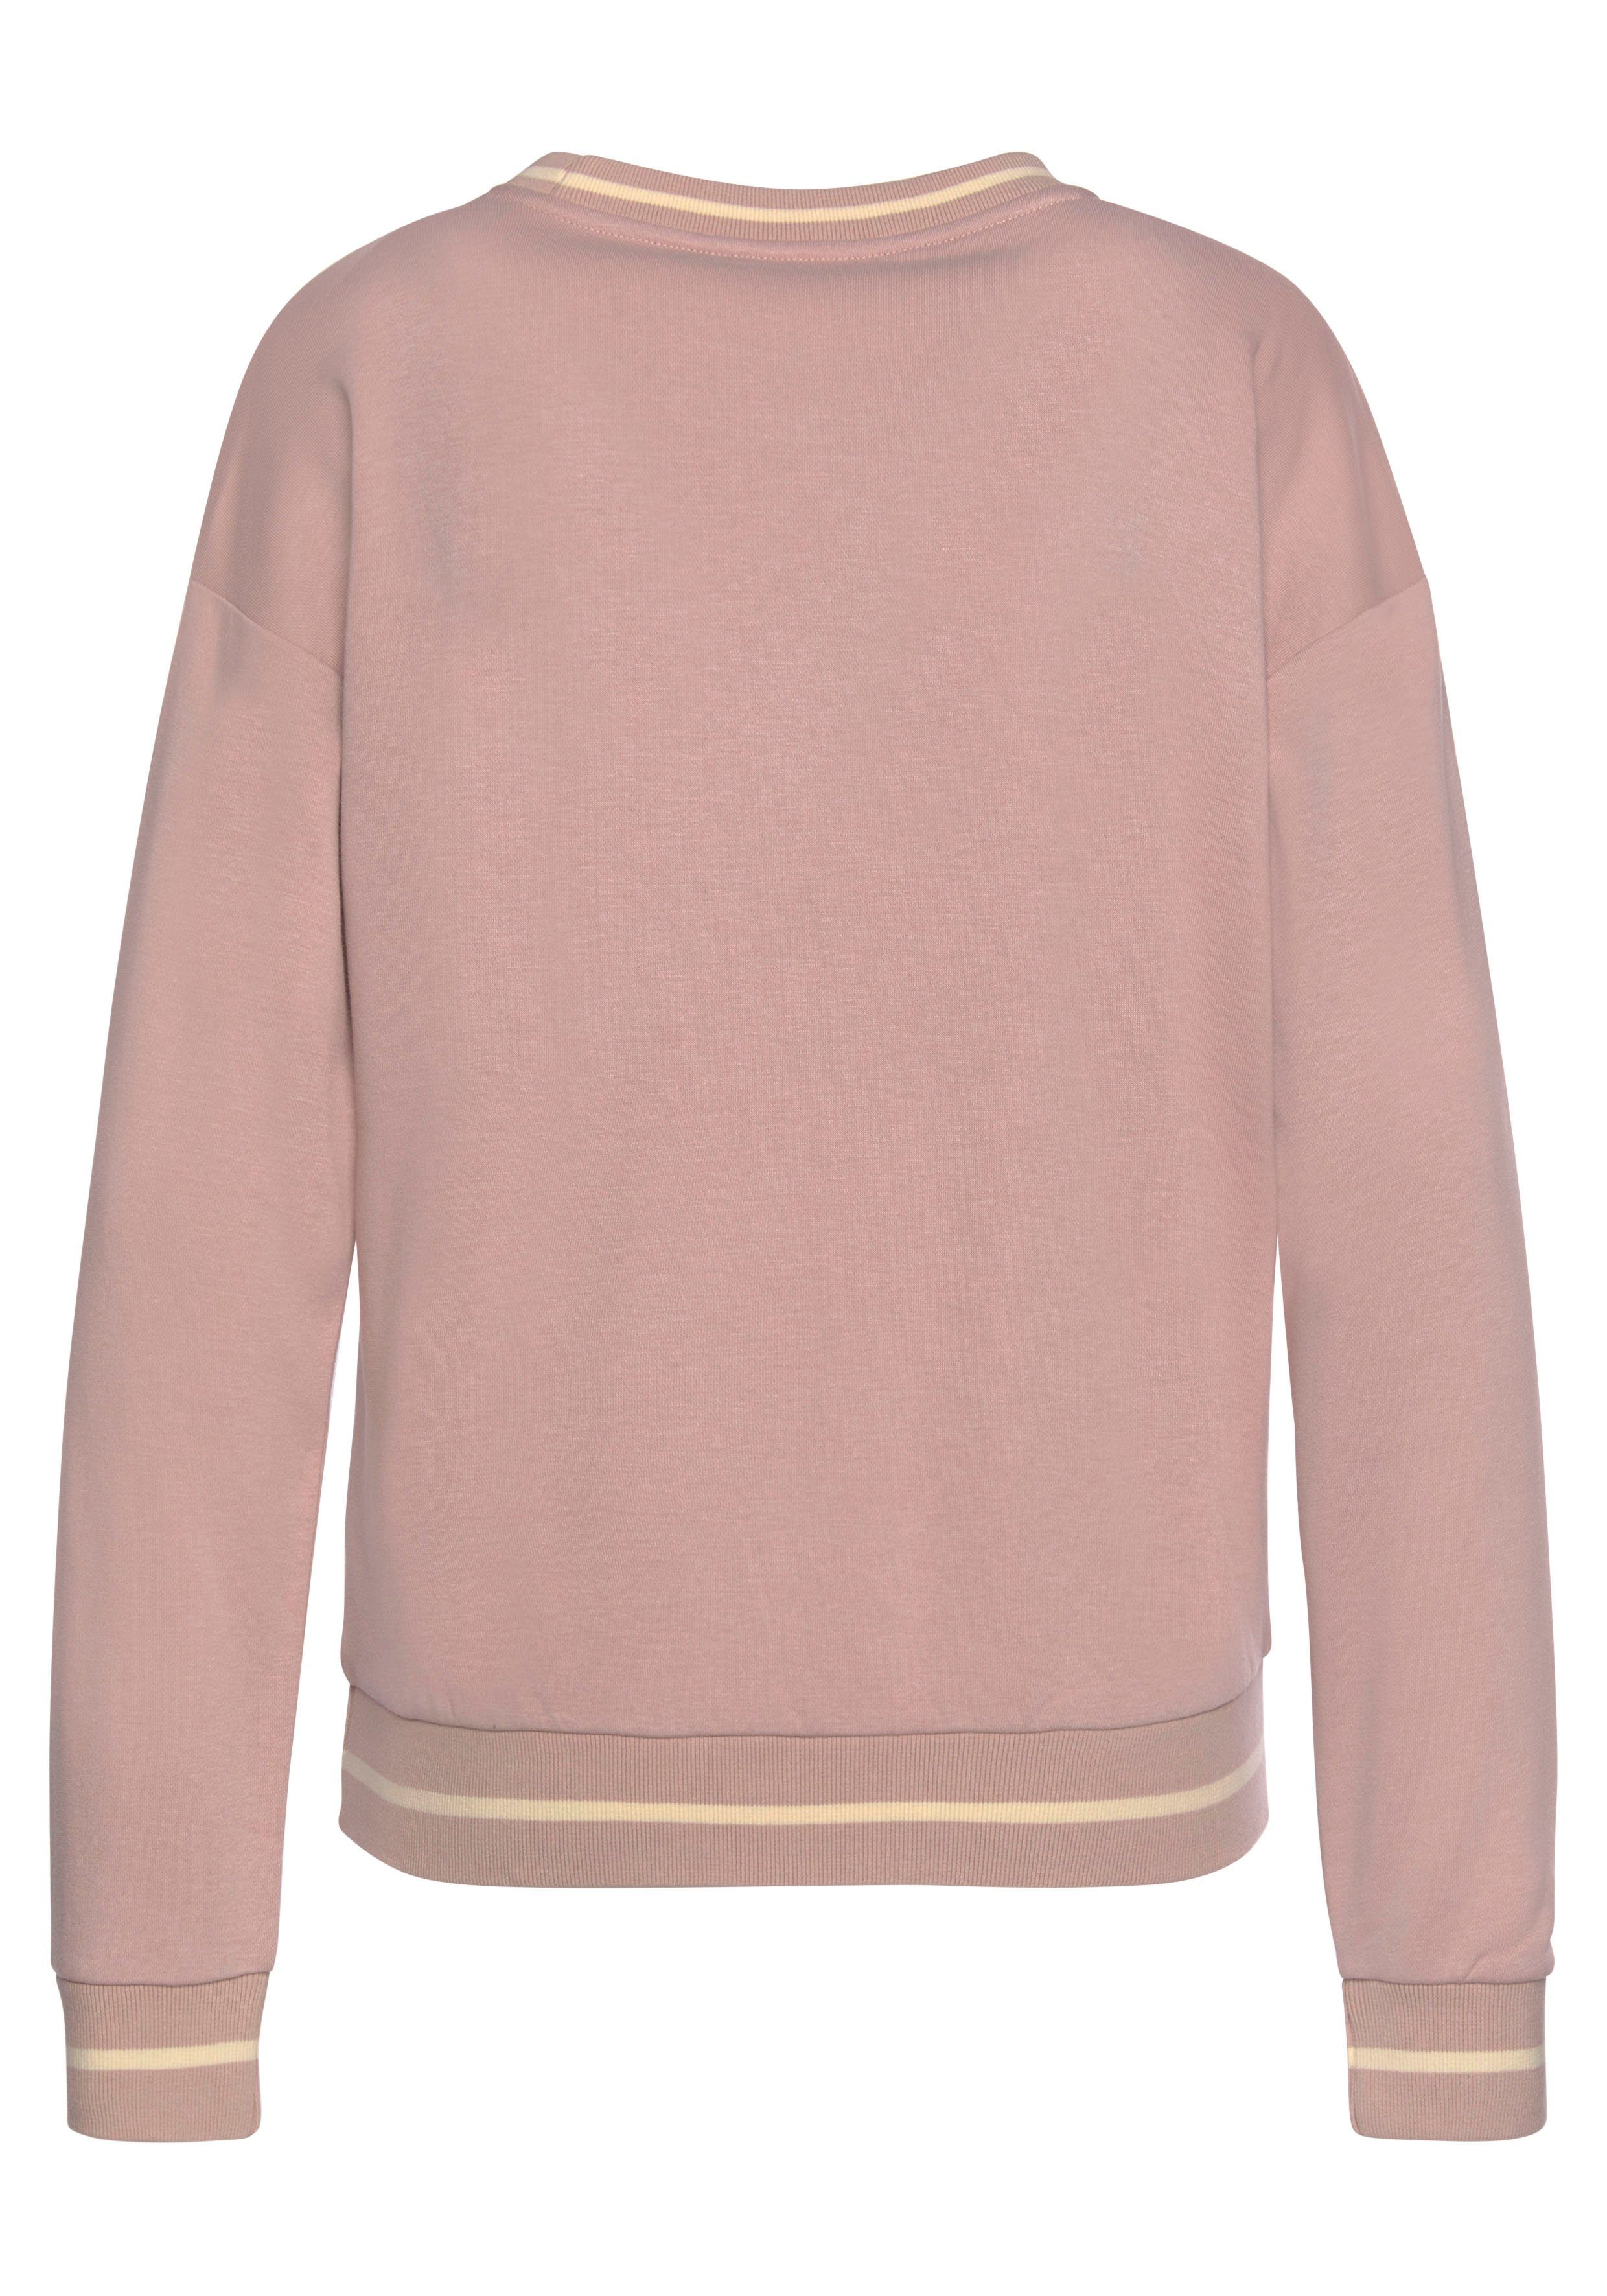 Sweatshirt Loungeanzug rosé LASCANA